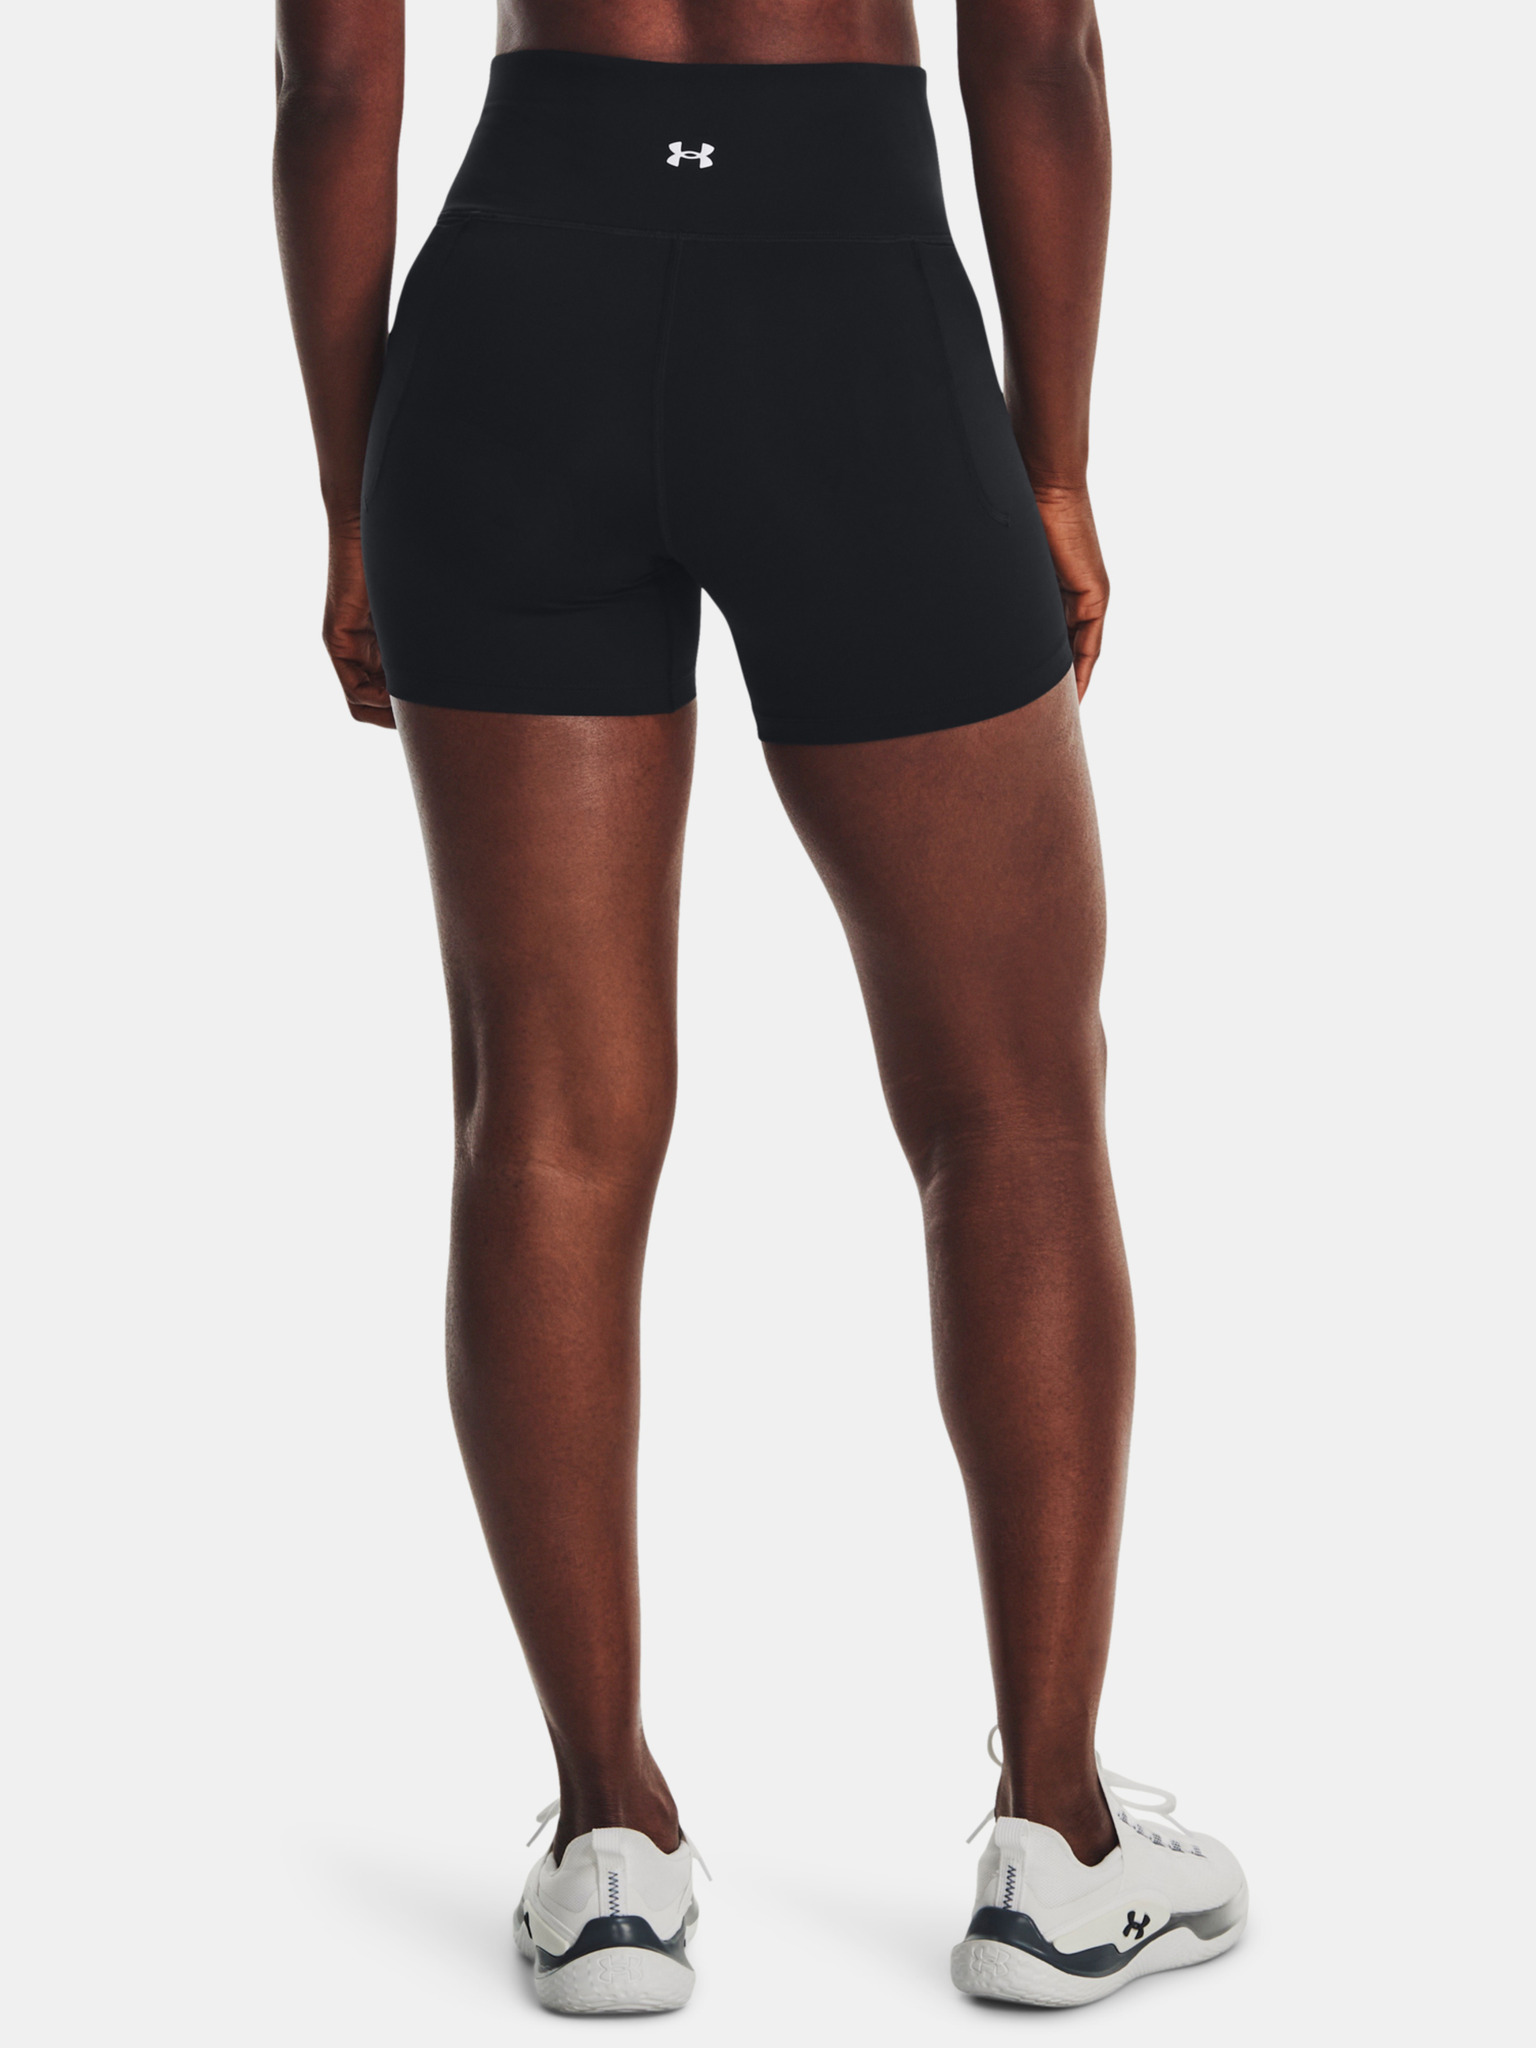 Under Armour Women's HeatGear Middy Shorts Black XS